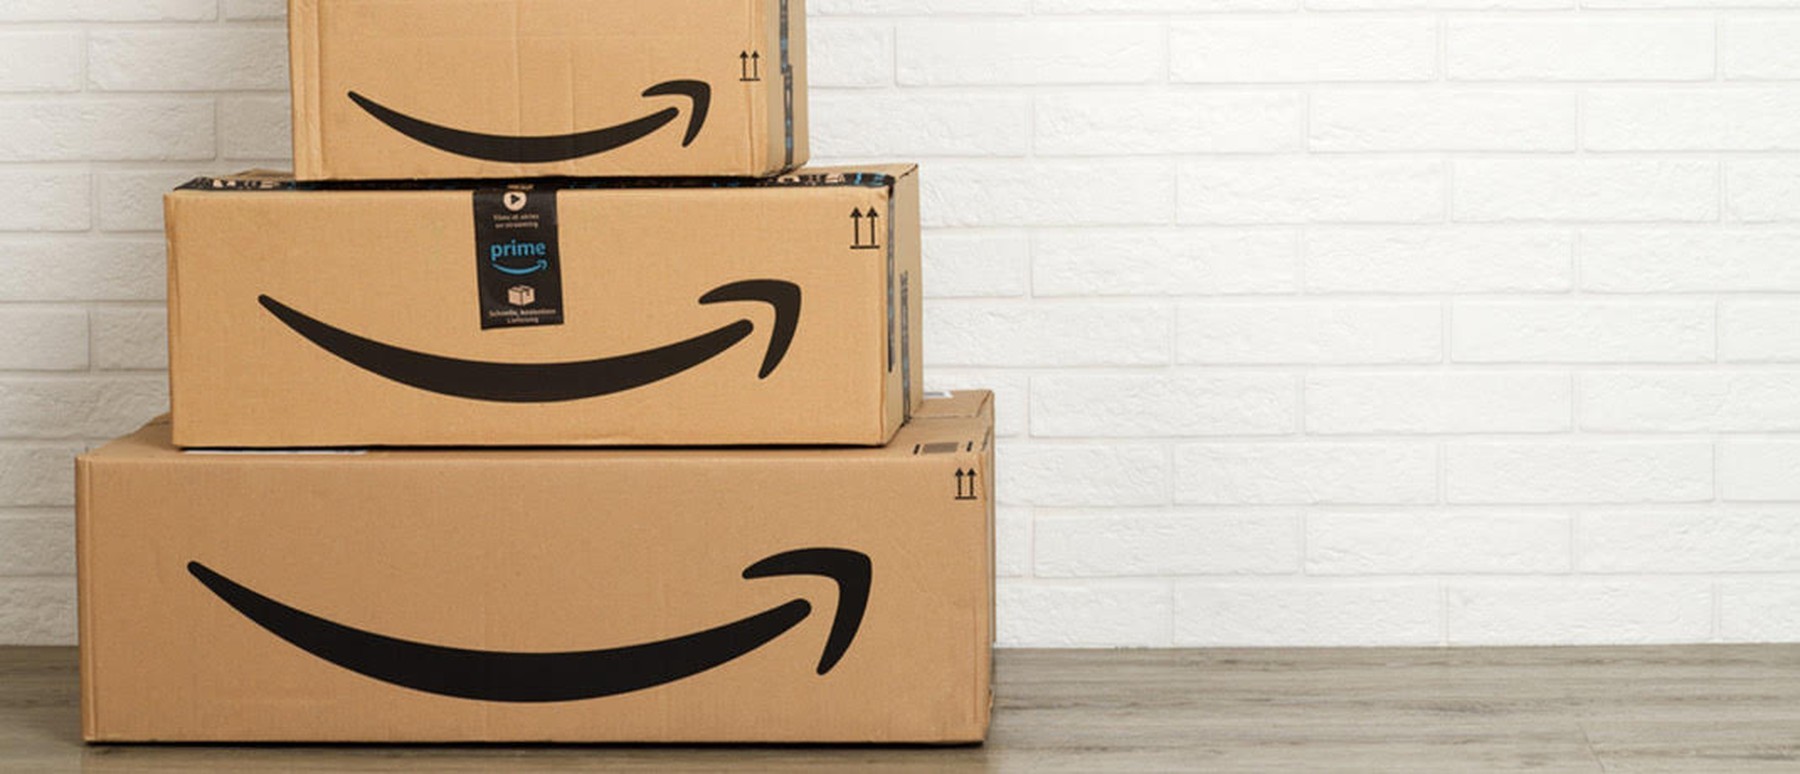 Hidden ways to save money on your Amazon order